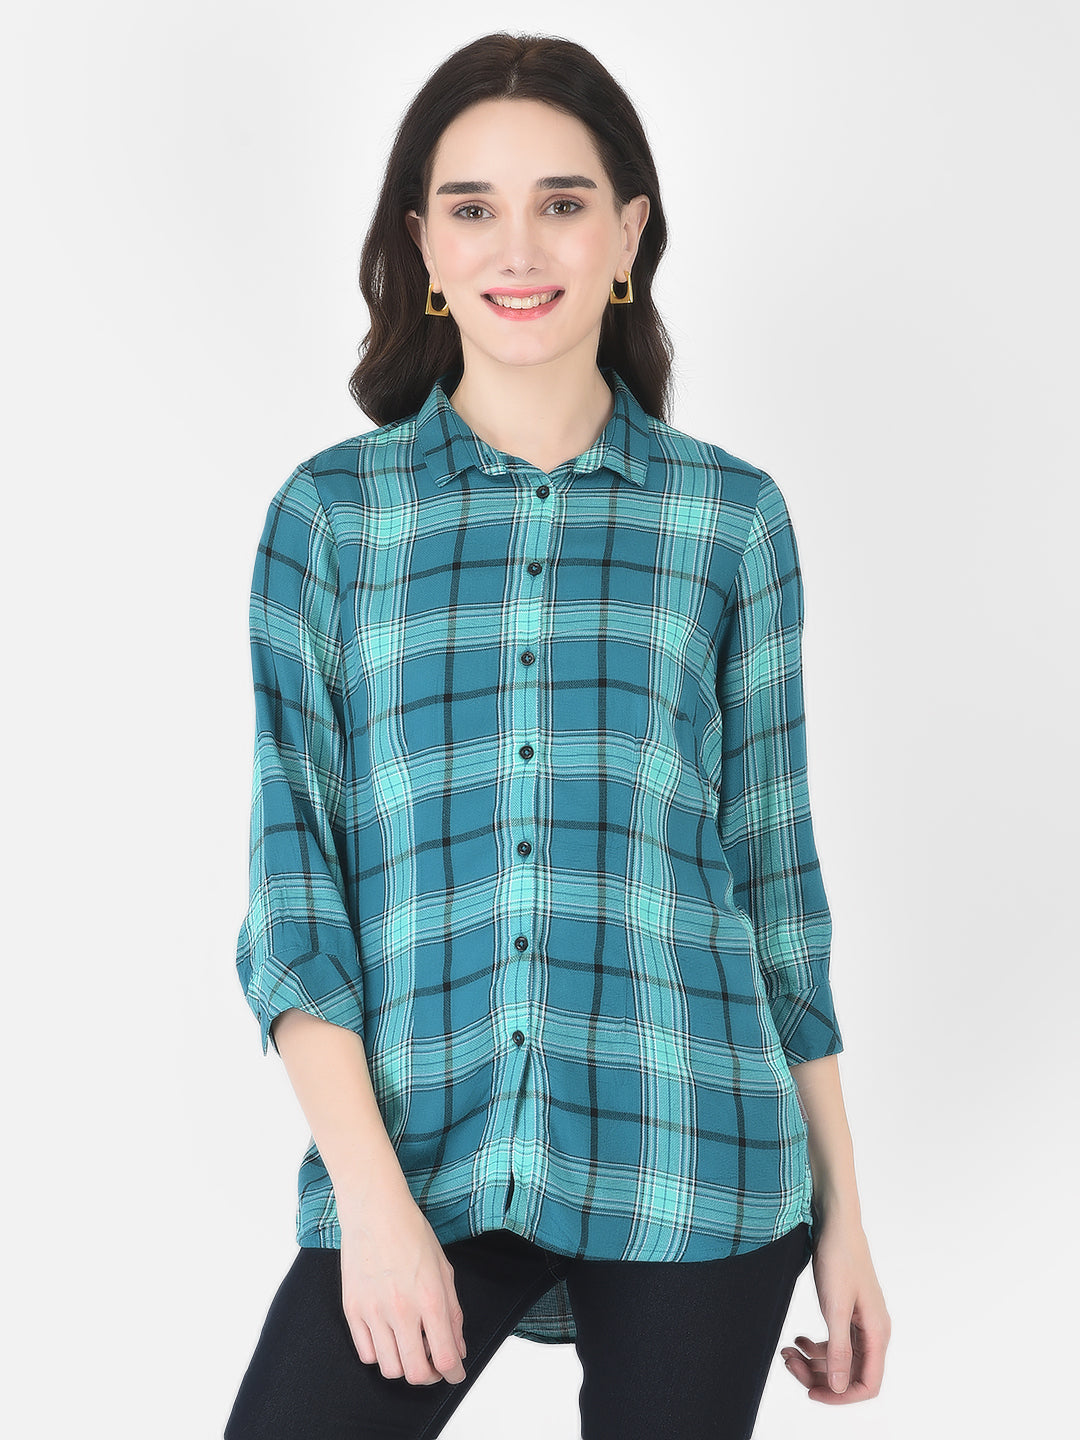 Carolina Blue Checked Shirt - Women Shirts